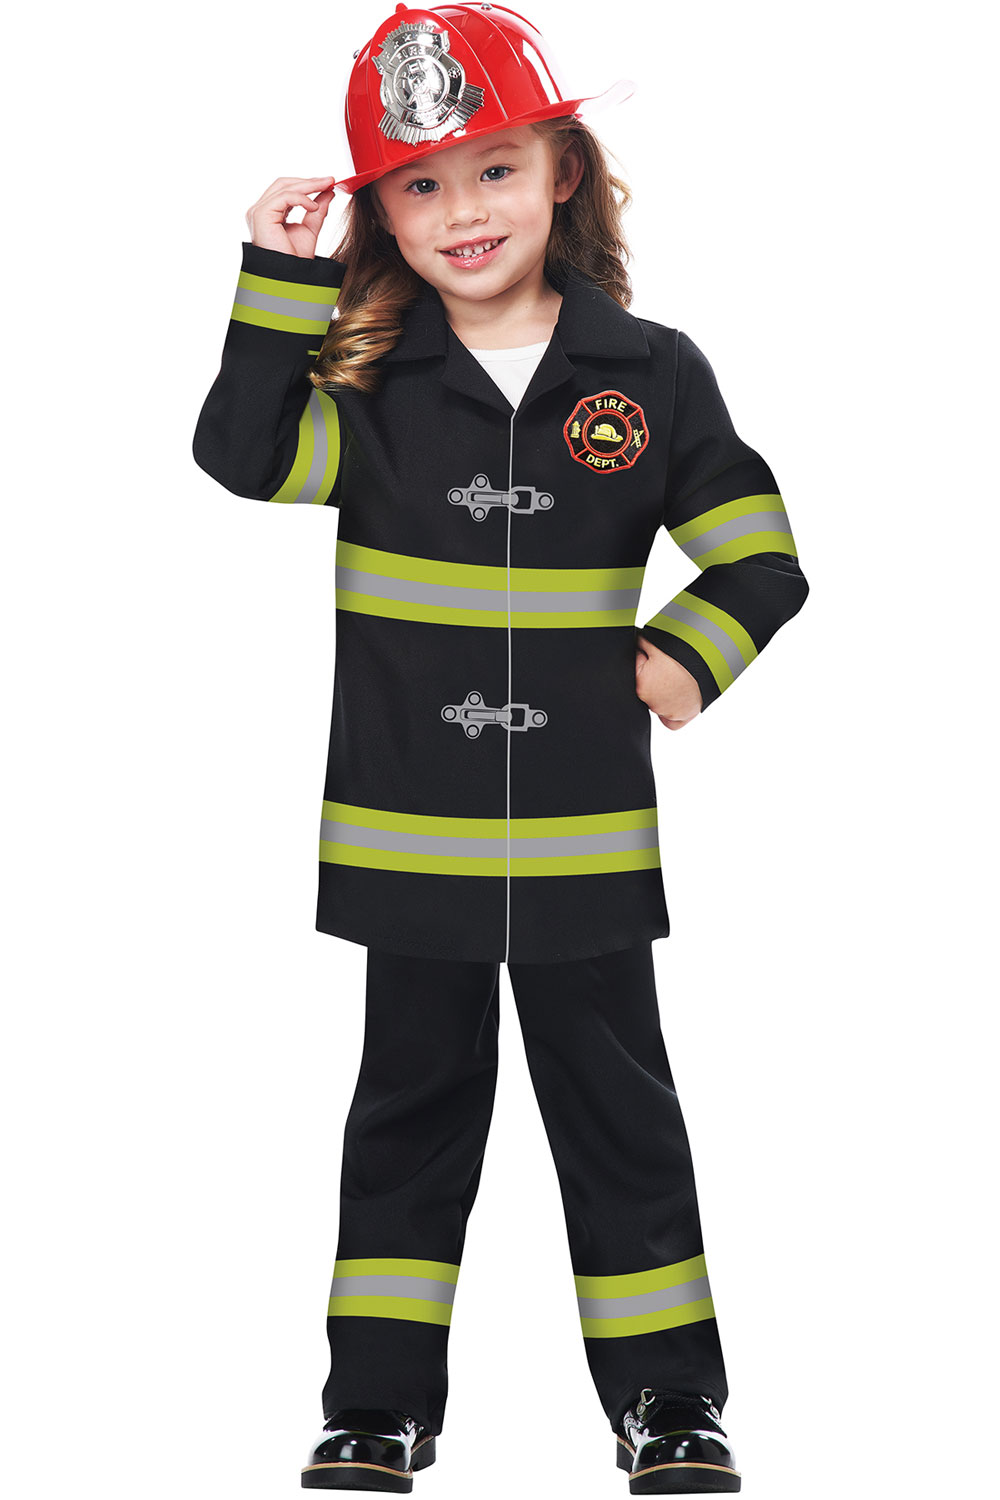 Junior Fire Chief Firefighter Unisex Child Costume 